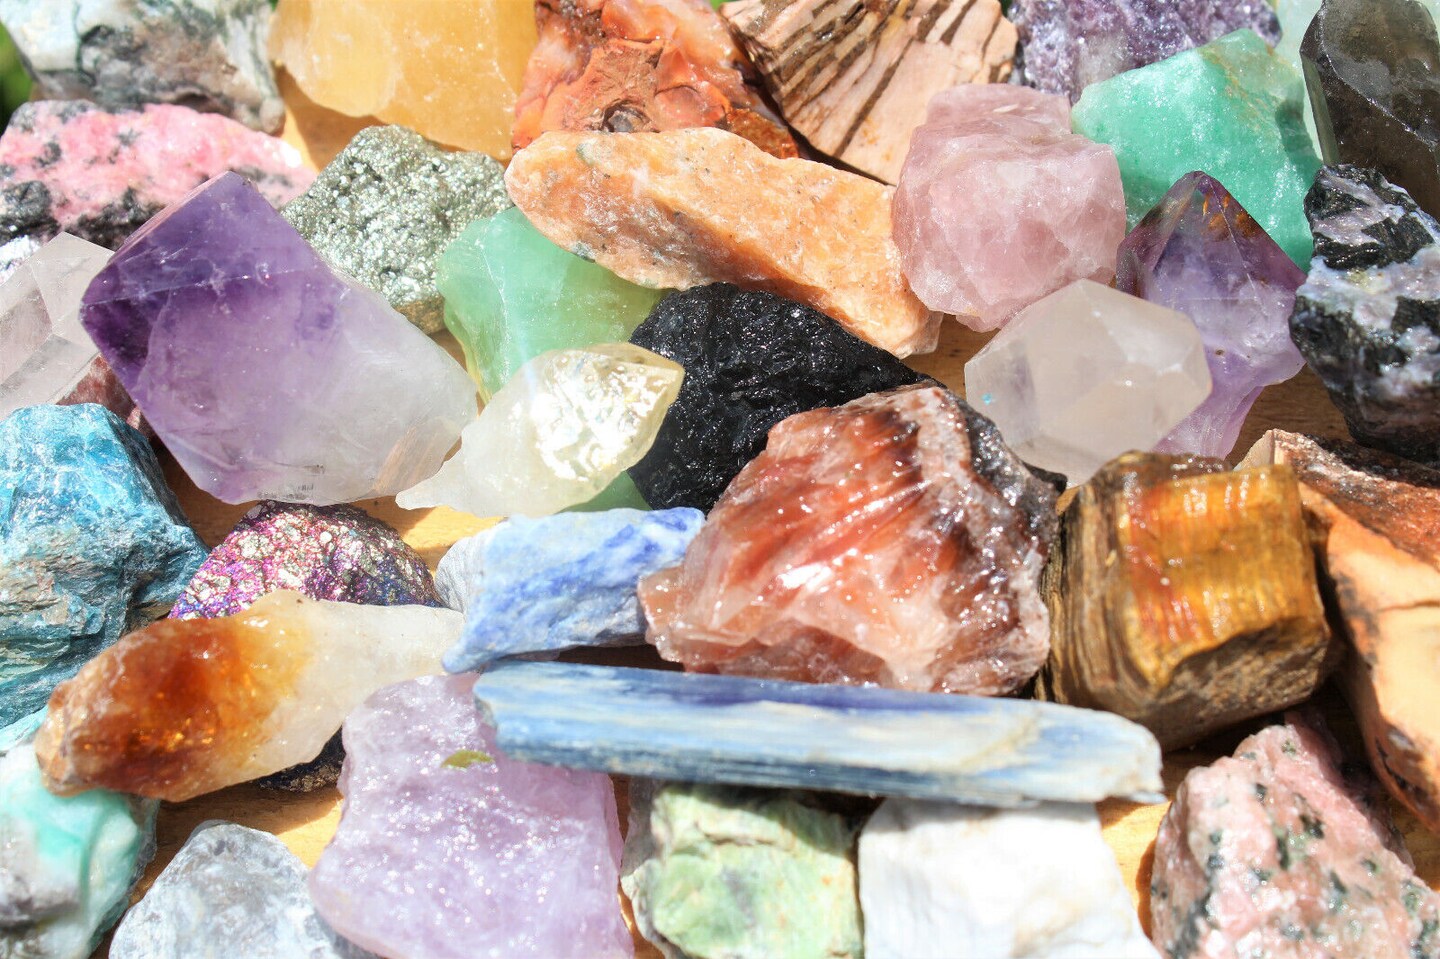 1000 Carat Gems Crystal Natural Rough Raw